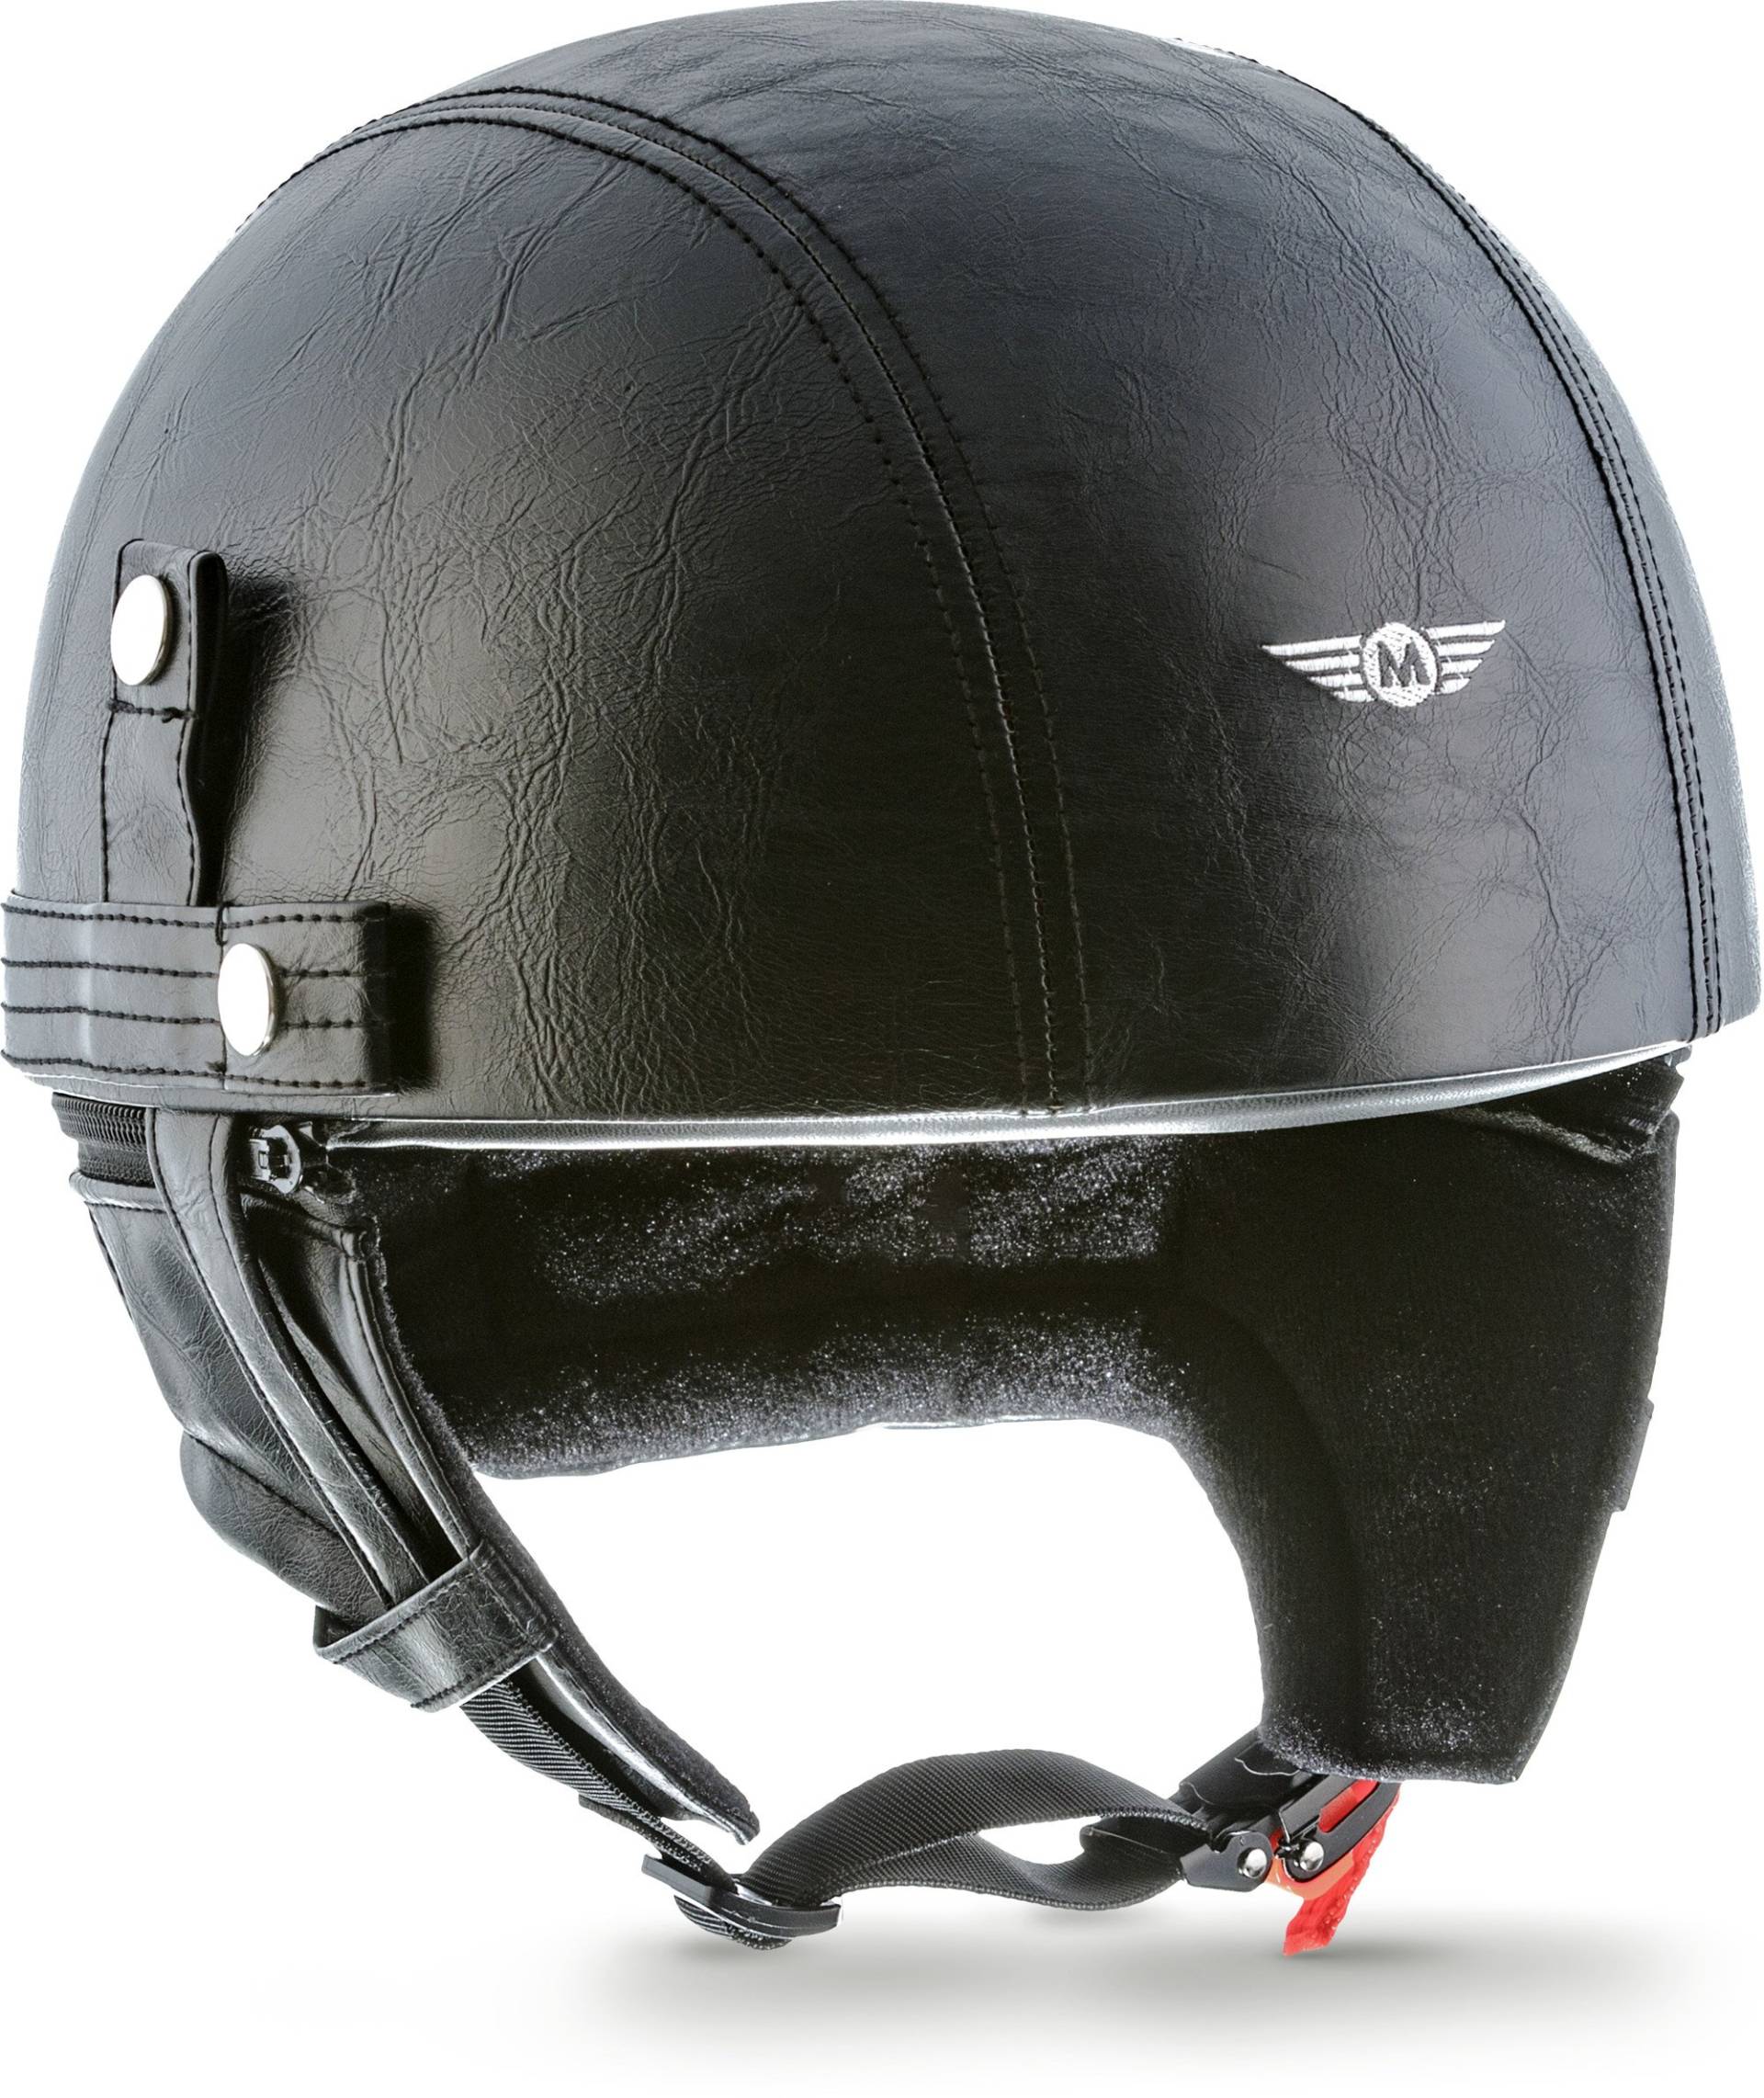 MOTO Helmets® D22 „Leather Black“ · Brain-Cap · Halbschale Jet-Helm Motorrad-Helm Bobber · Fiberglas Schnellverschluss SlimShell Tasche M (57-58cm) von Moto Helmets